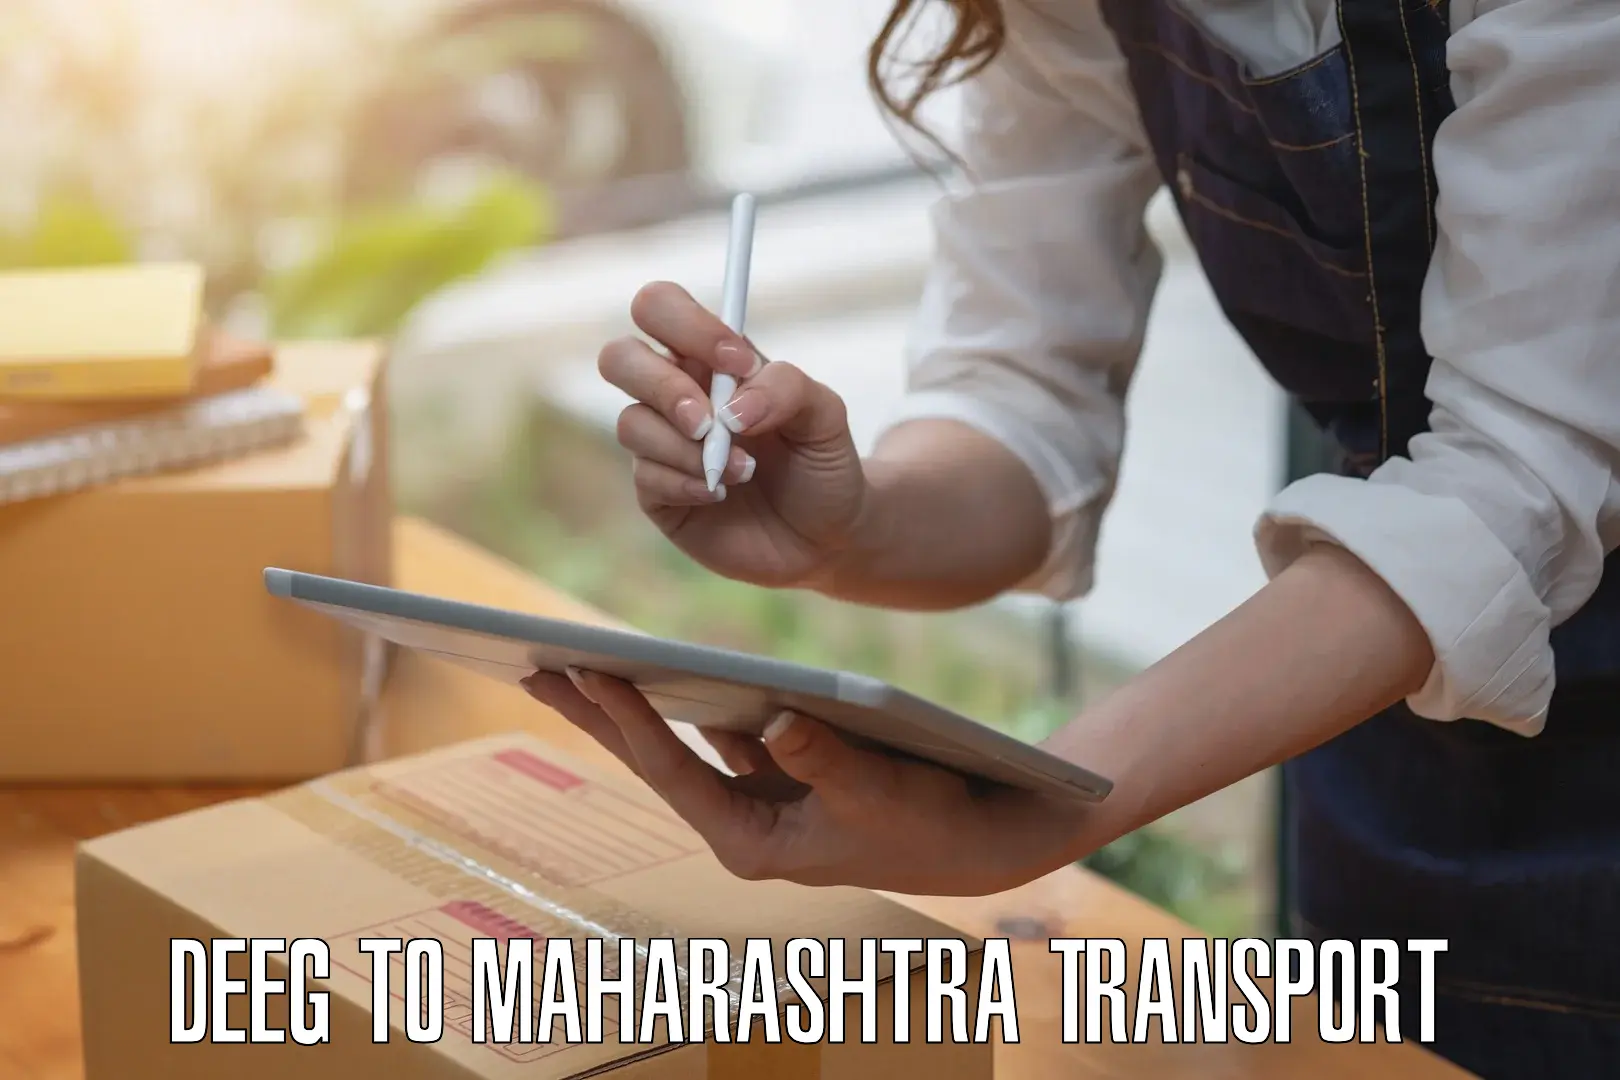 Transport in sharing Deeg to IIIT Pune